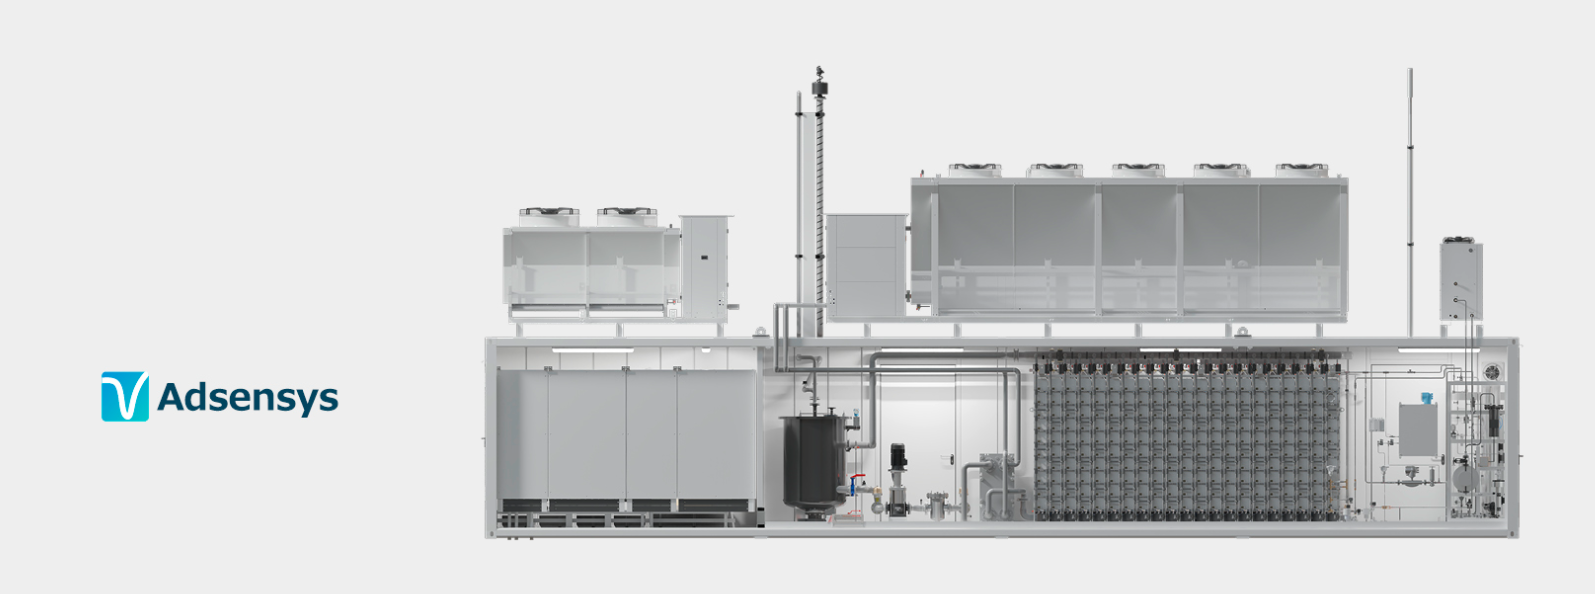 Enapter – MW-klasse elektrolyser wordt geleverd aan Nederland in Q4 2023